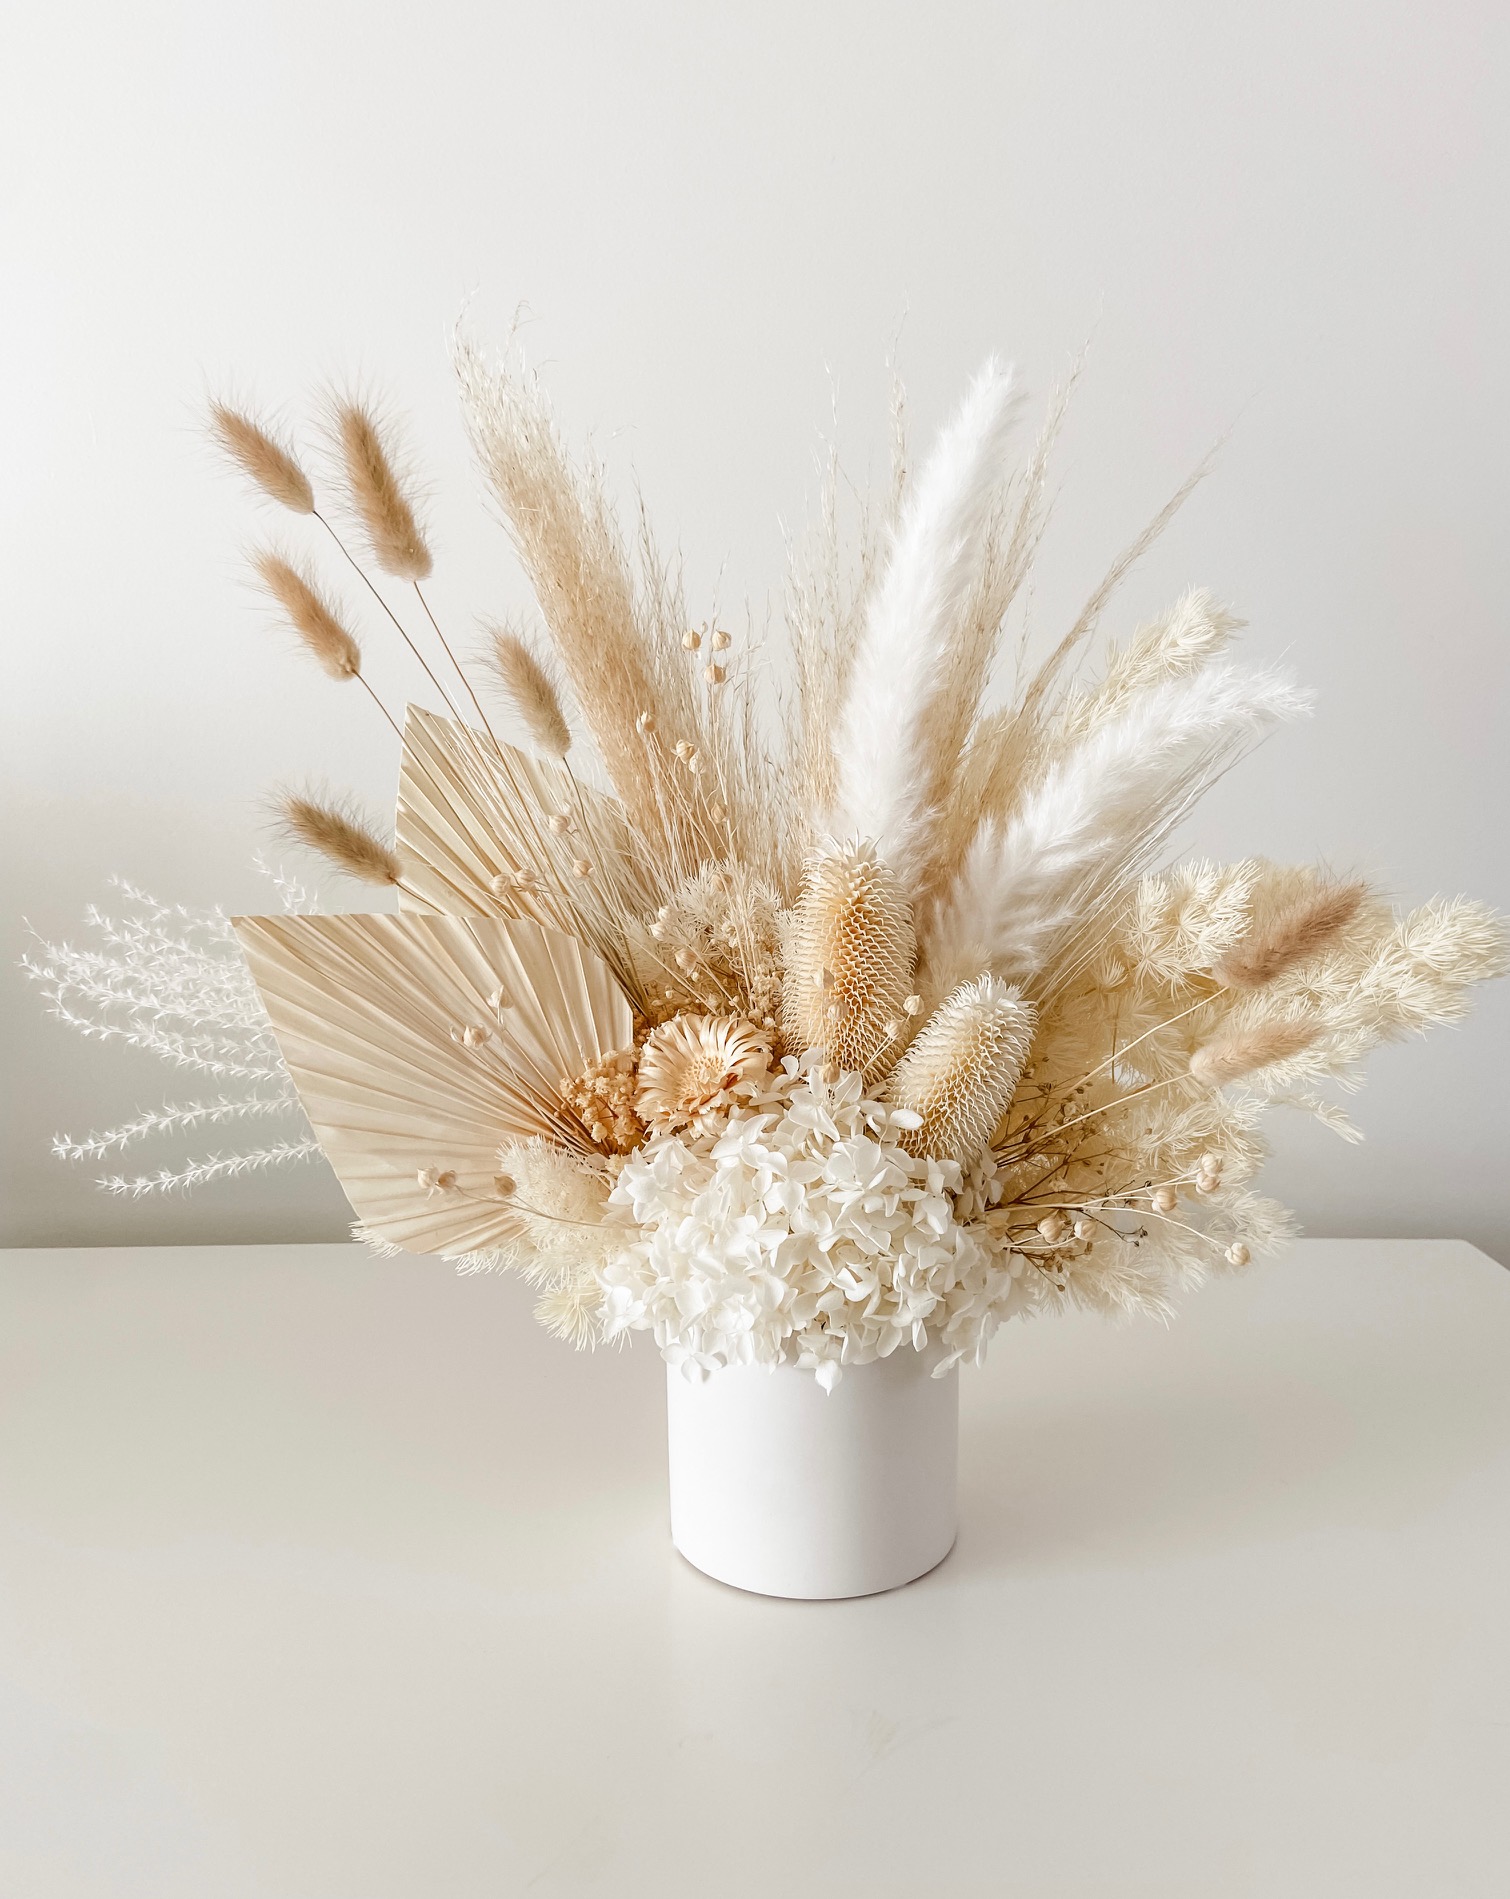 luxe dried flower arrangement